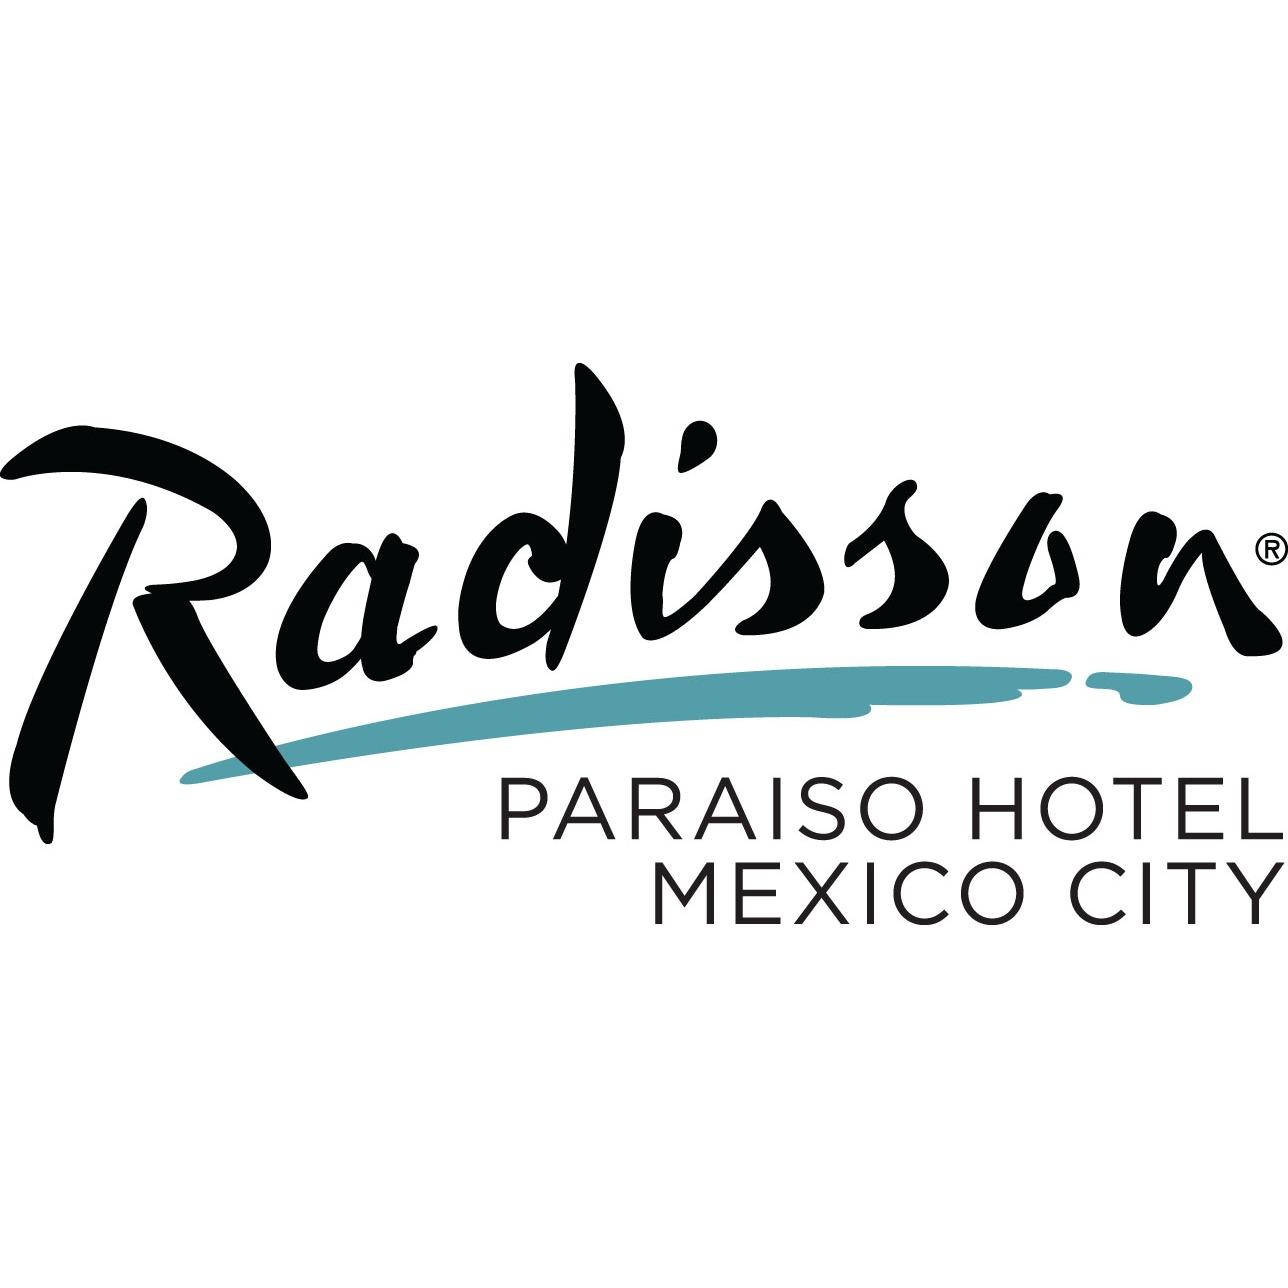 Radisson Paraiso Hotel Mexico City Tlalpan